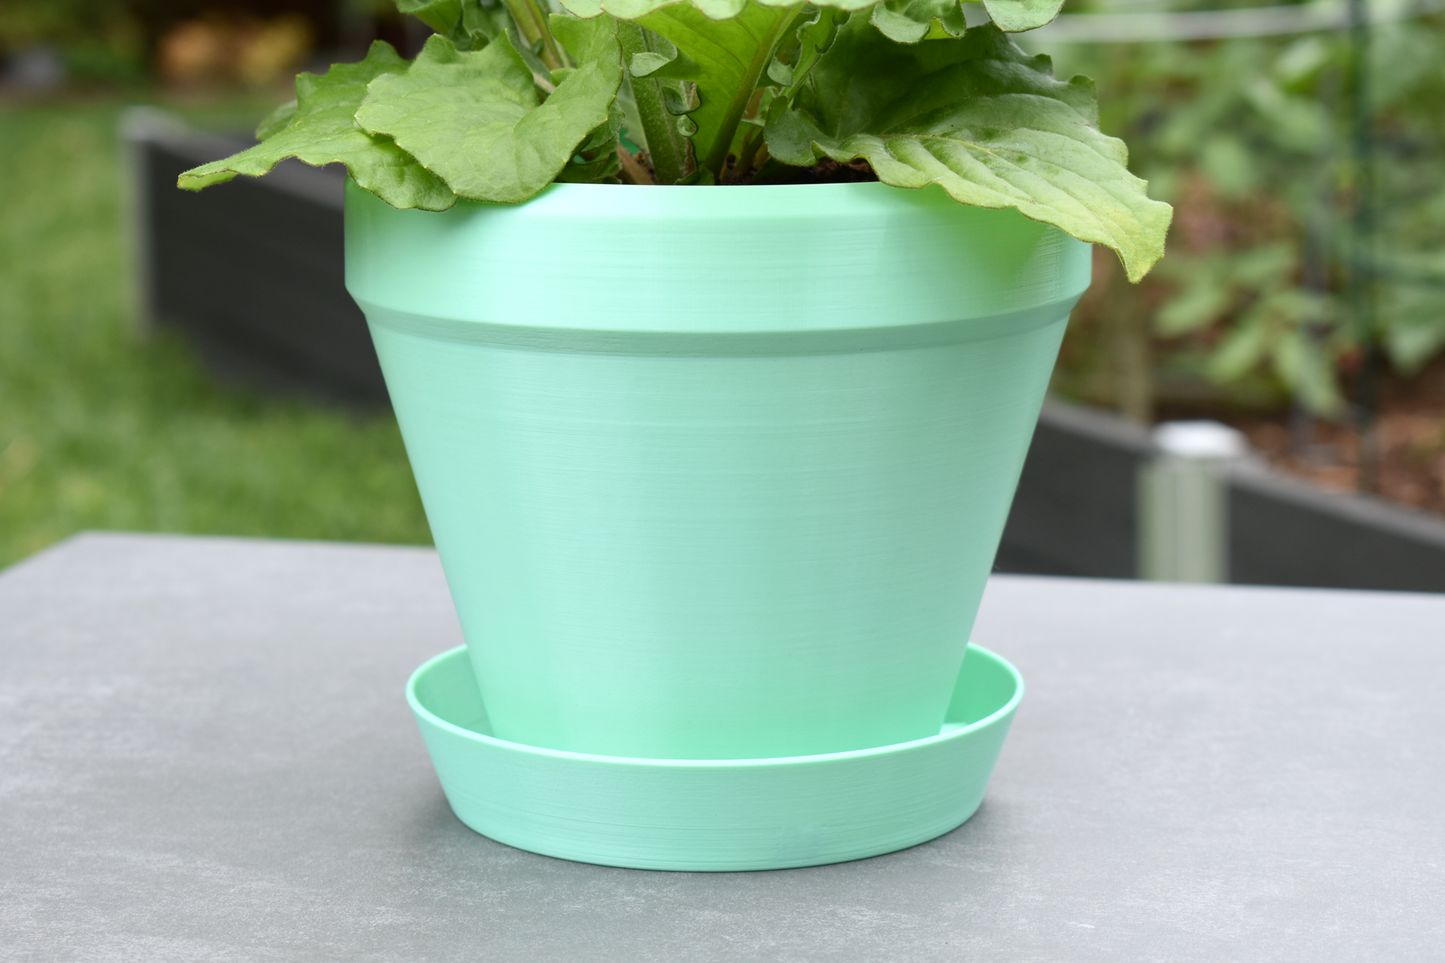 6-inch Colorful Outdoor-Safe Flower Pot, Optional Saucer